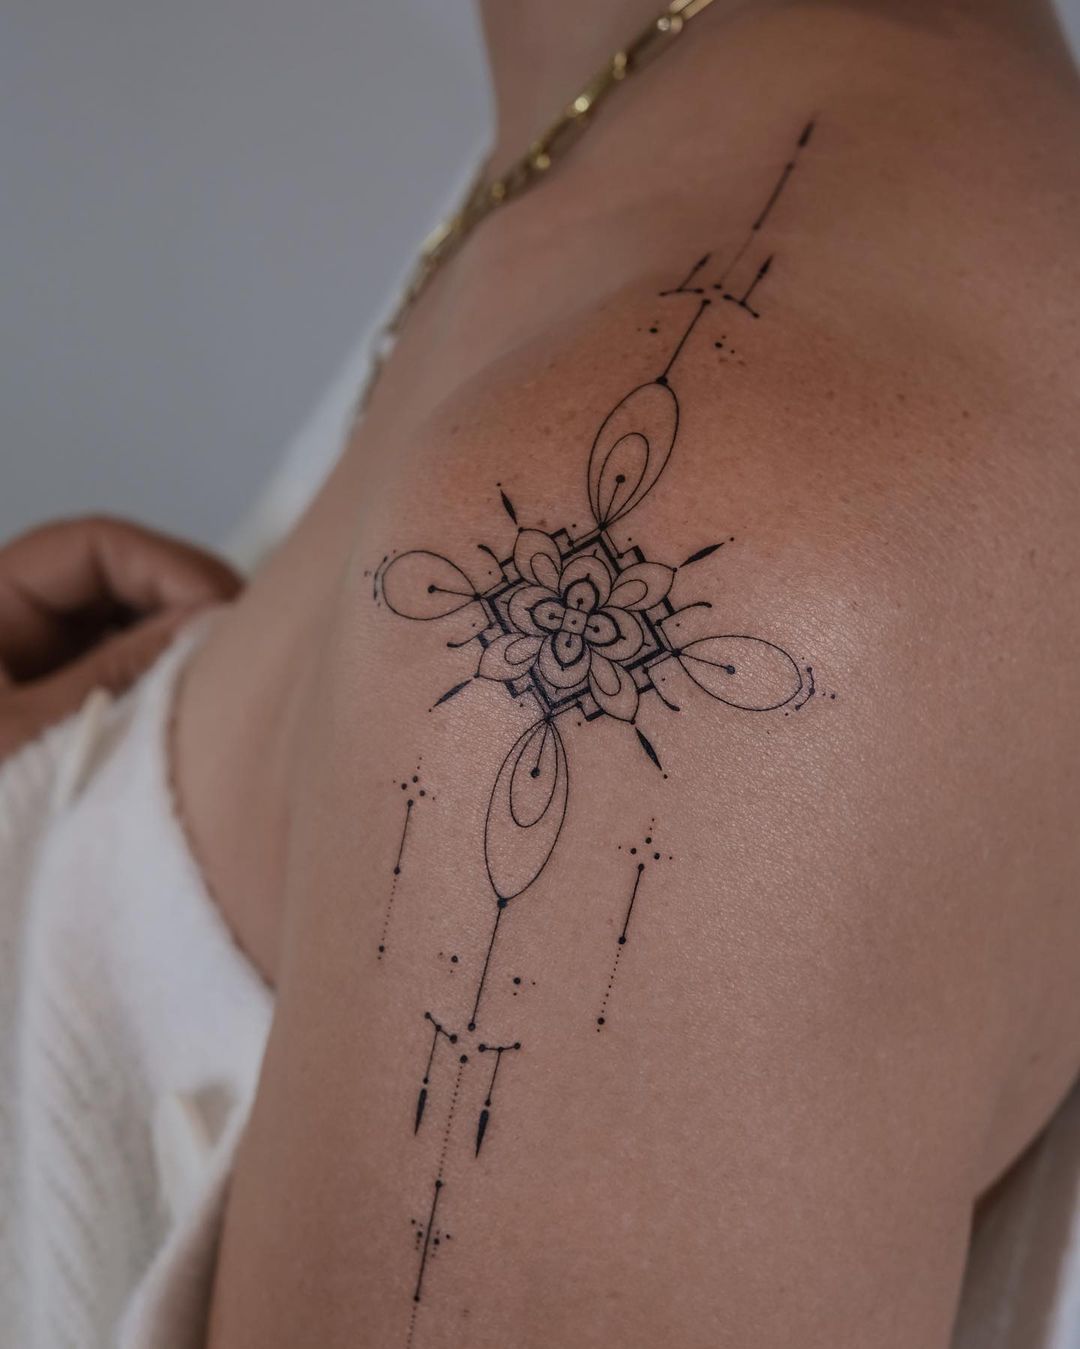 Geometric tattoos on shoulder by monochrom.ink